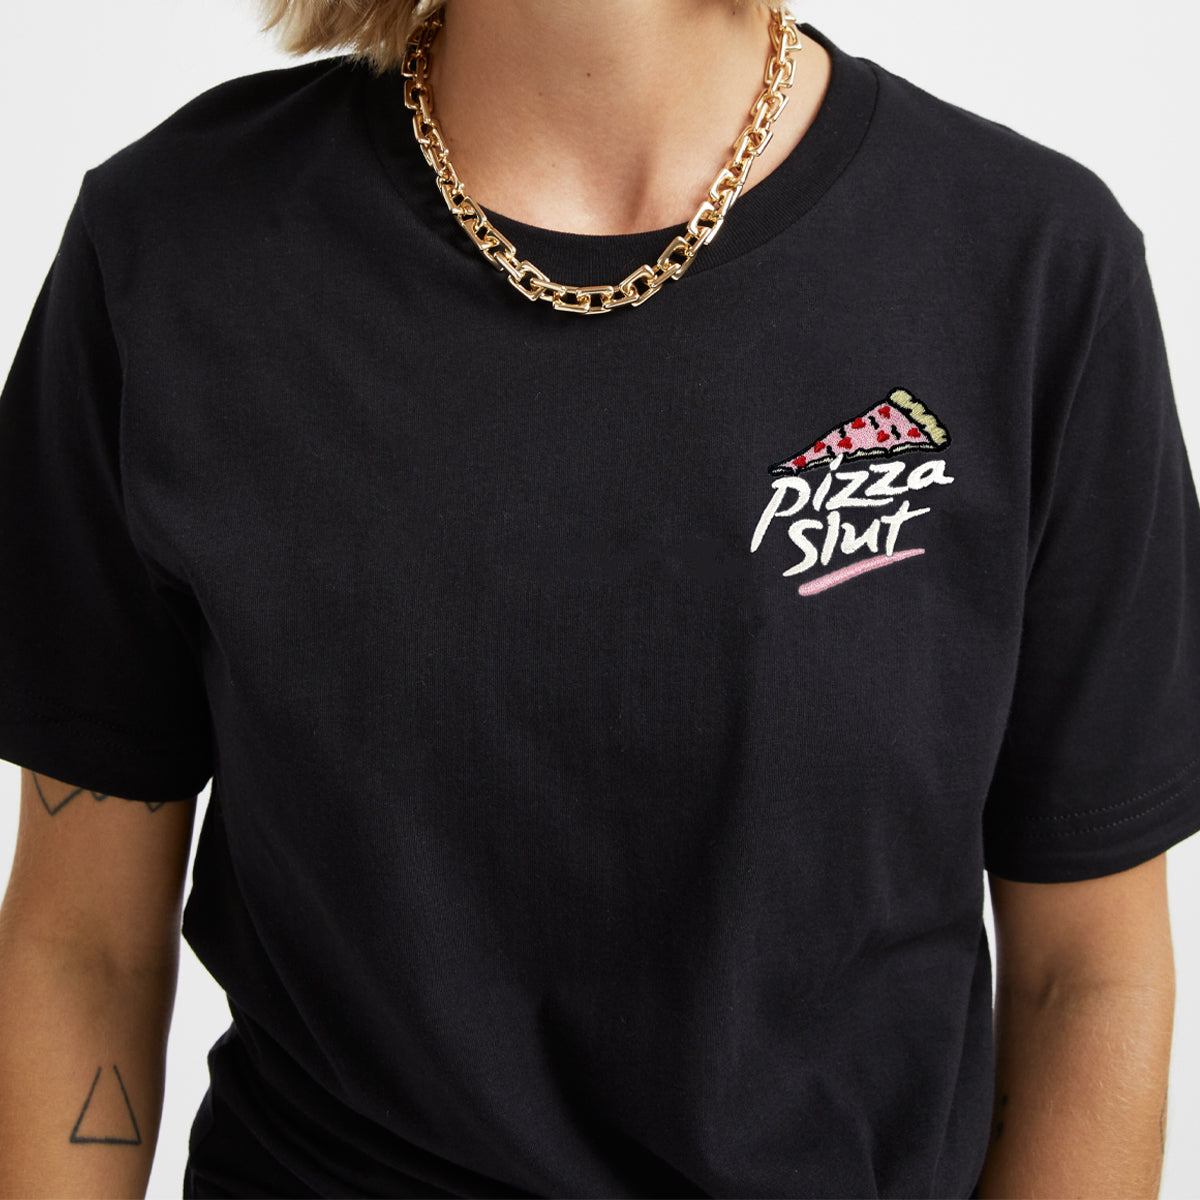 Pizza Slut Embroidered T-Shirt (Unisex)